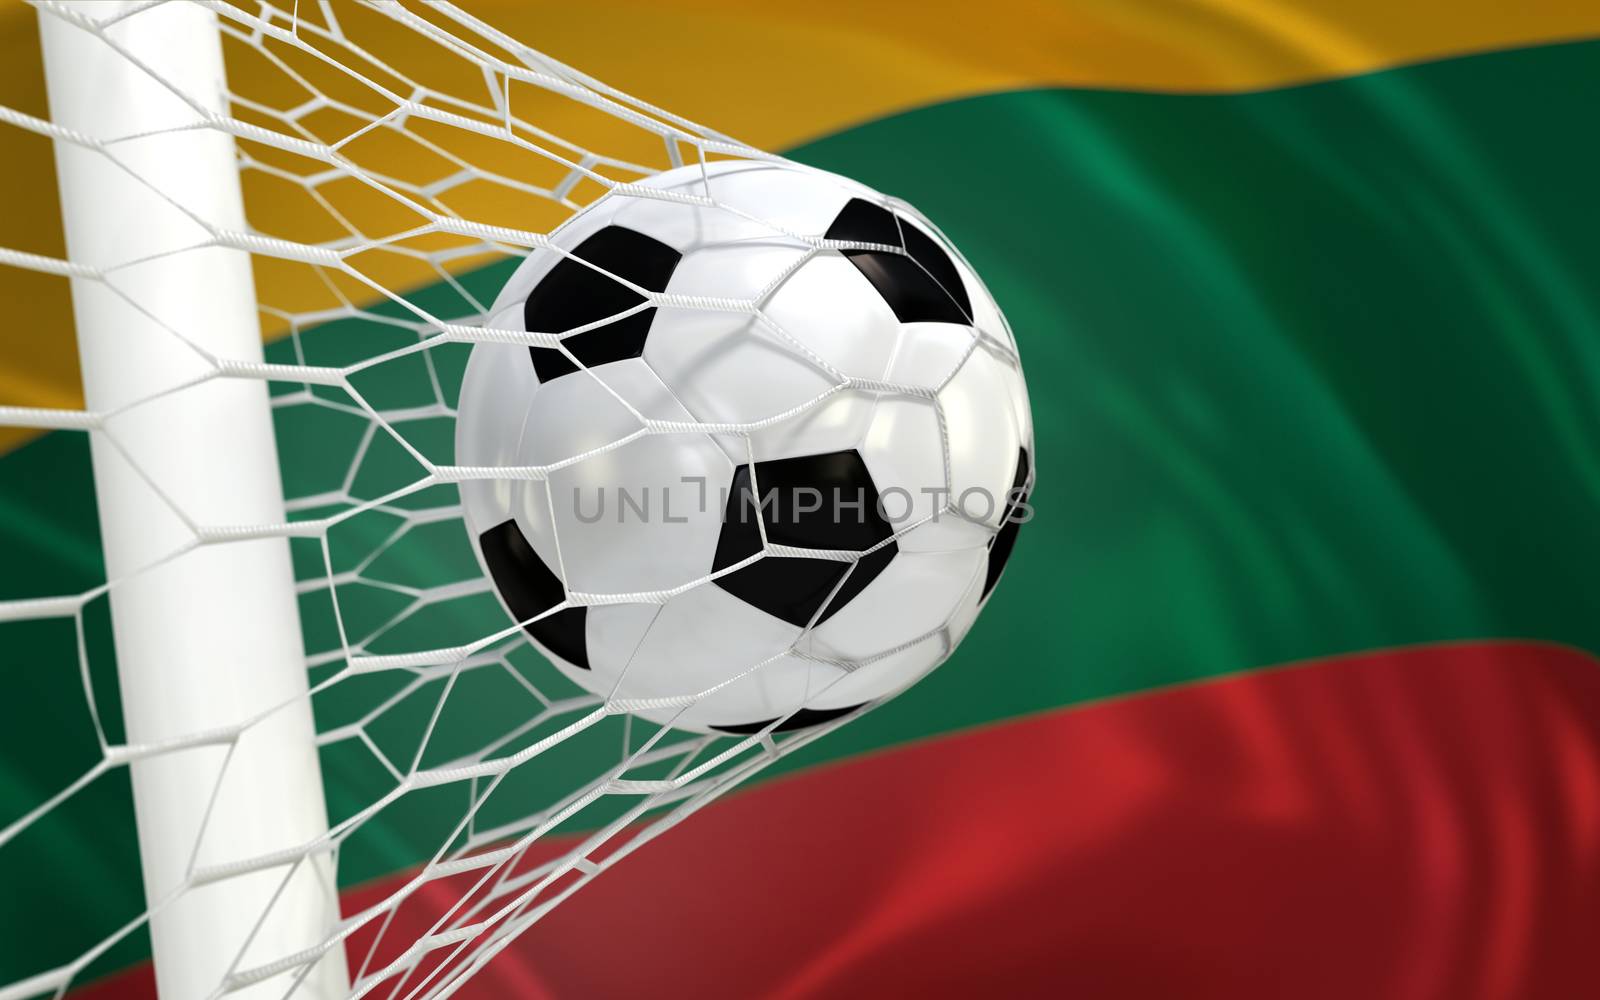 Flag of Lithuania and soccer ball in goal net by Barbraford